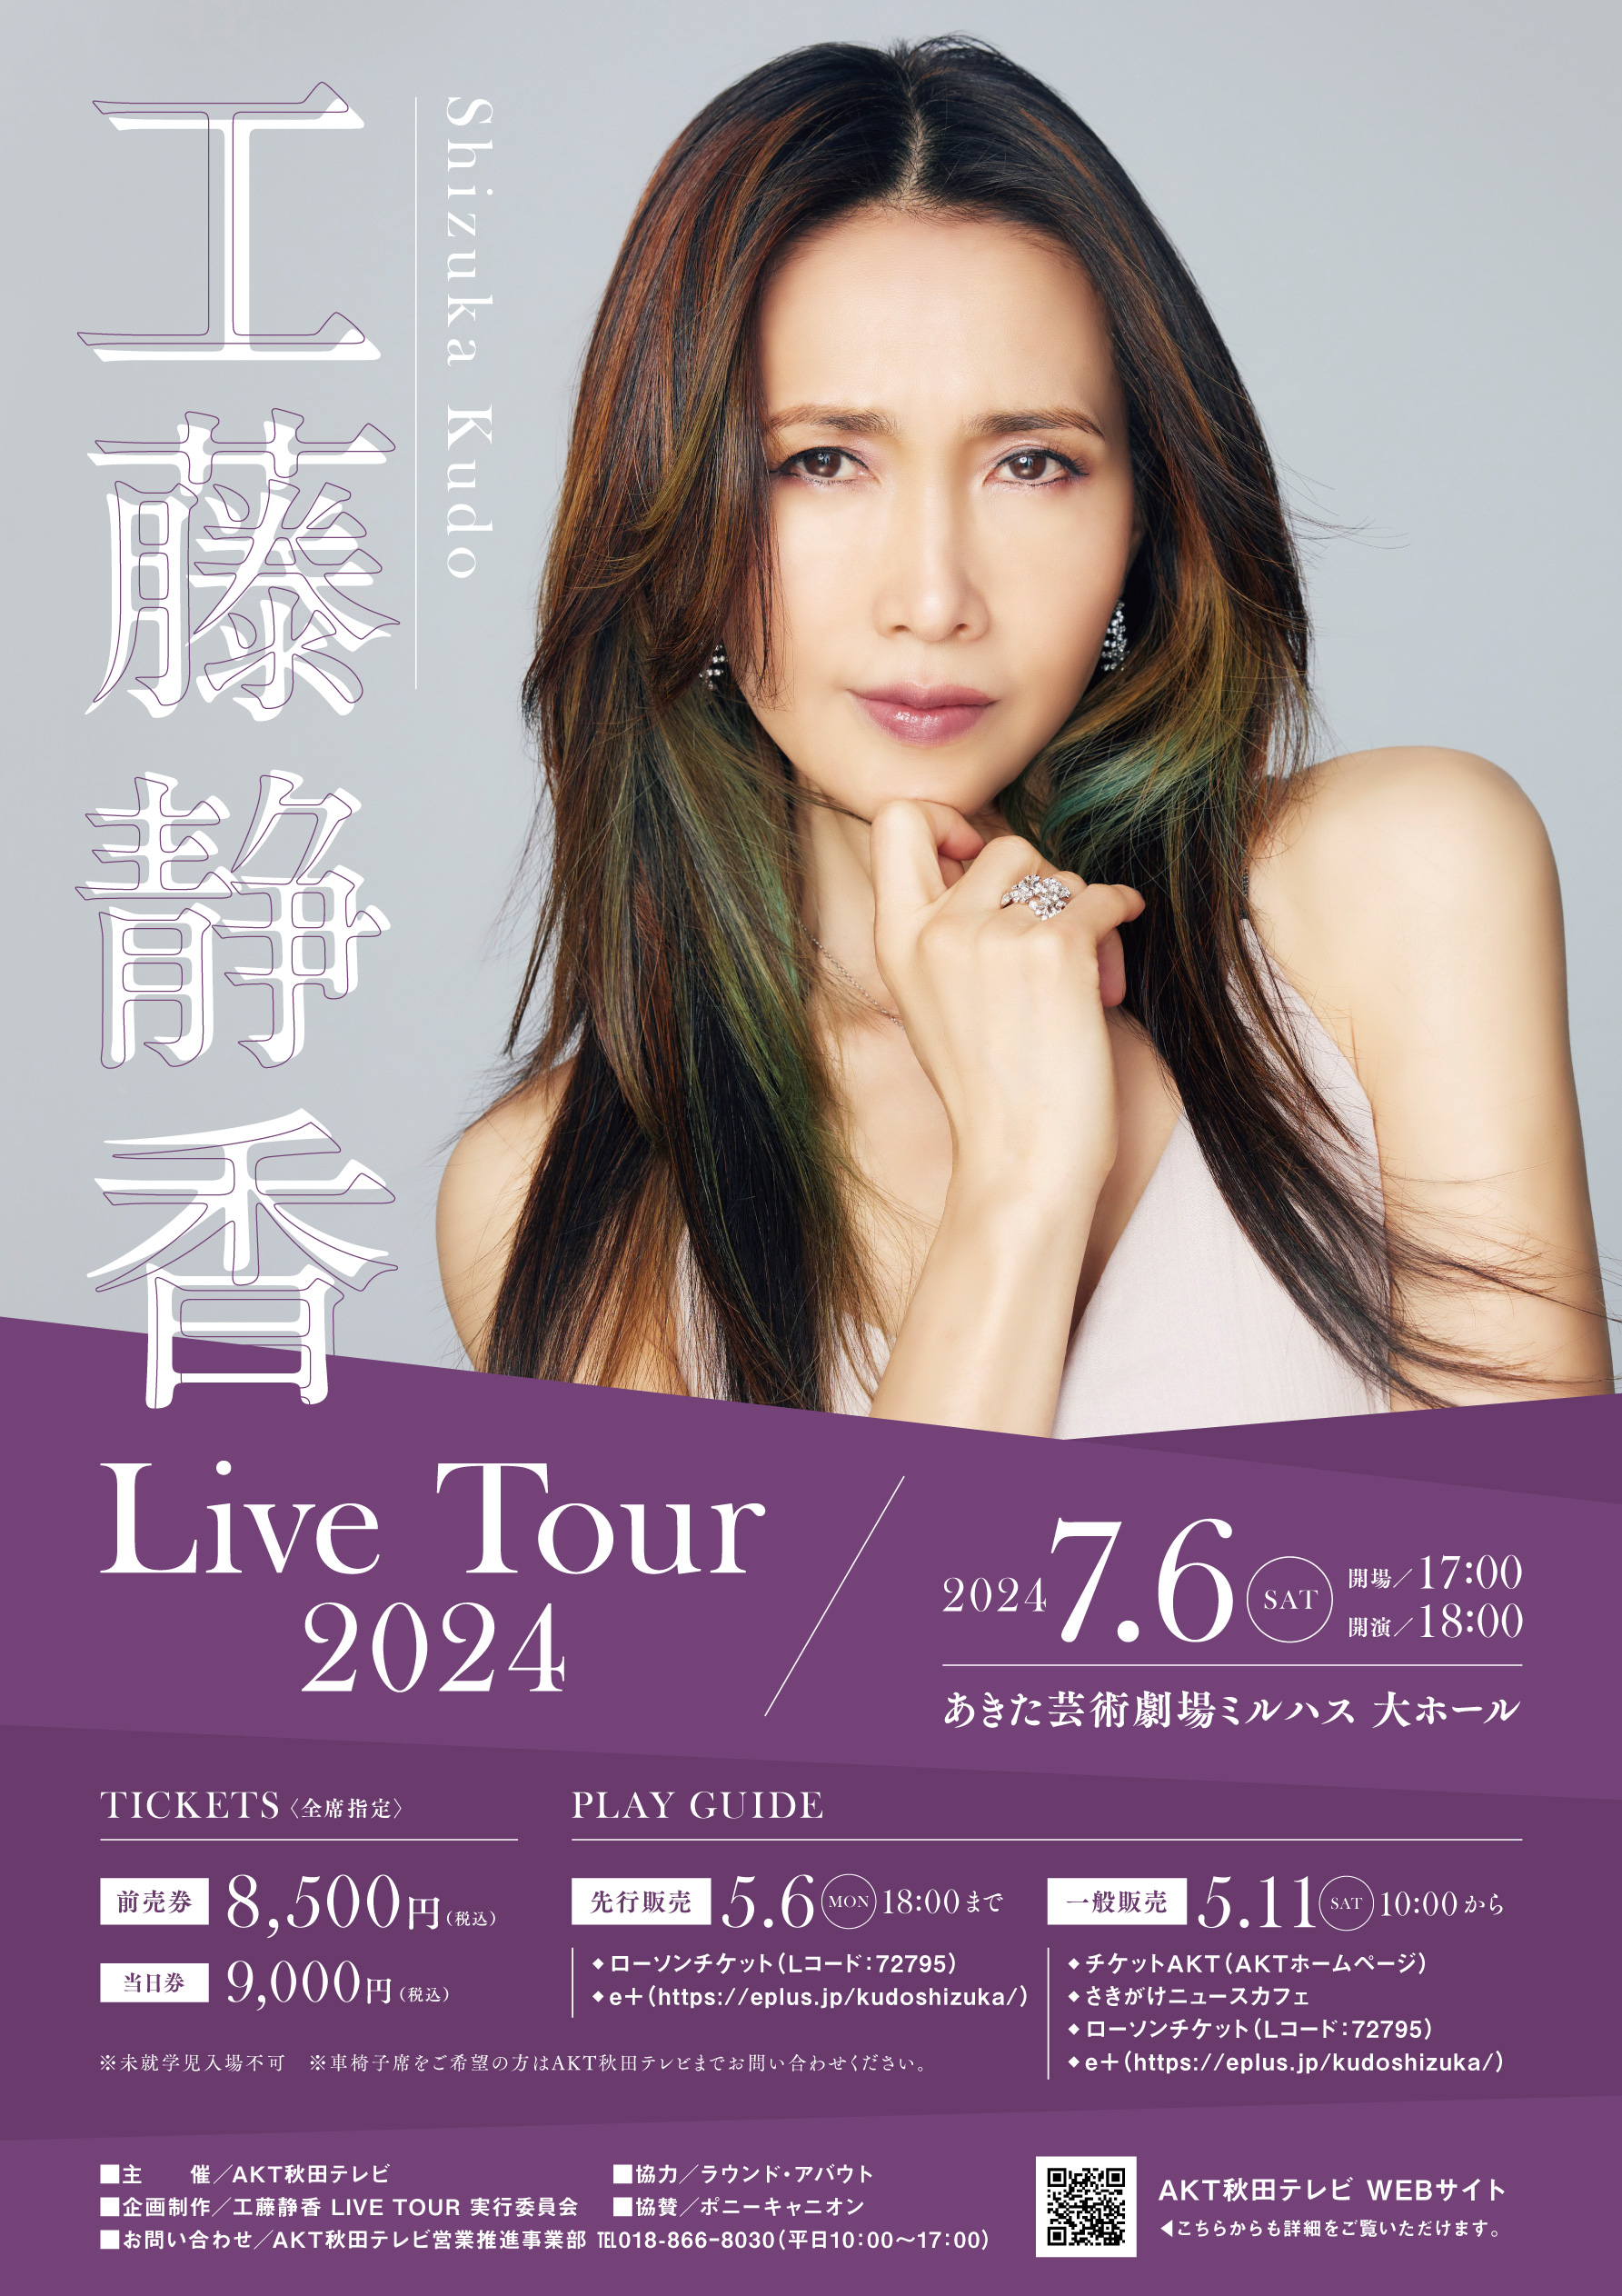 「Shizuka Kudo「明鏡止水〜piece of my heart〜」Concert Tour 2024」のポスター